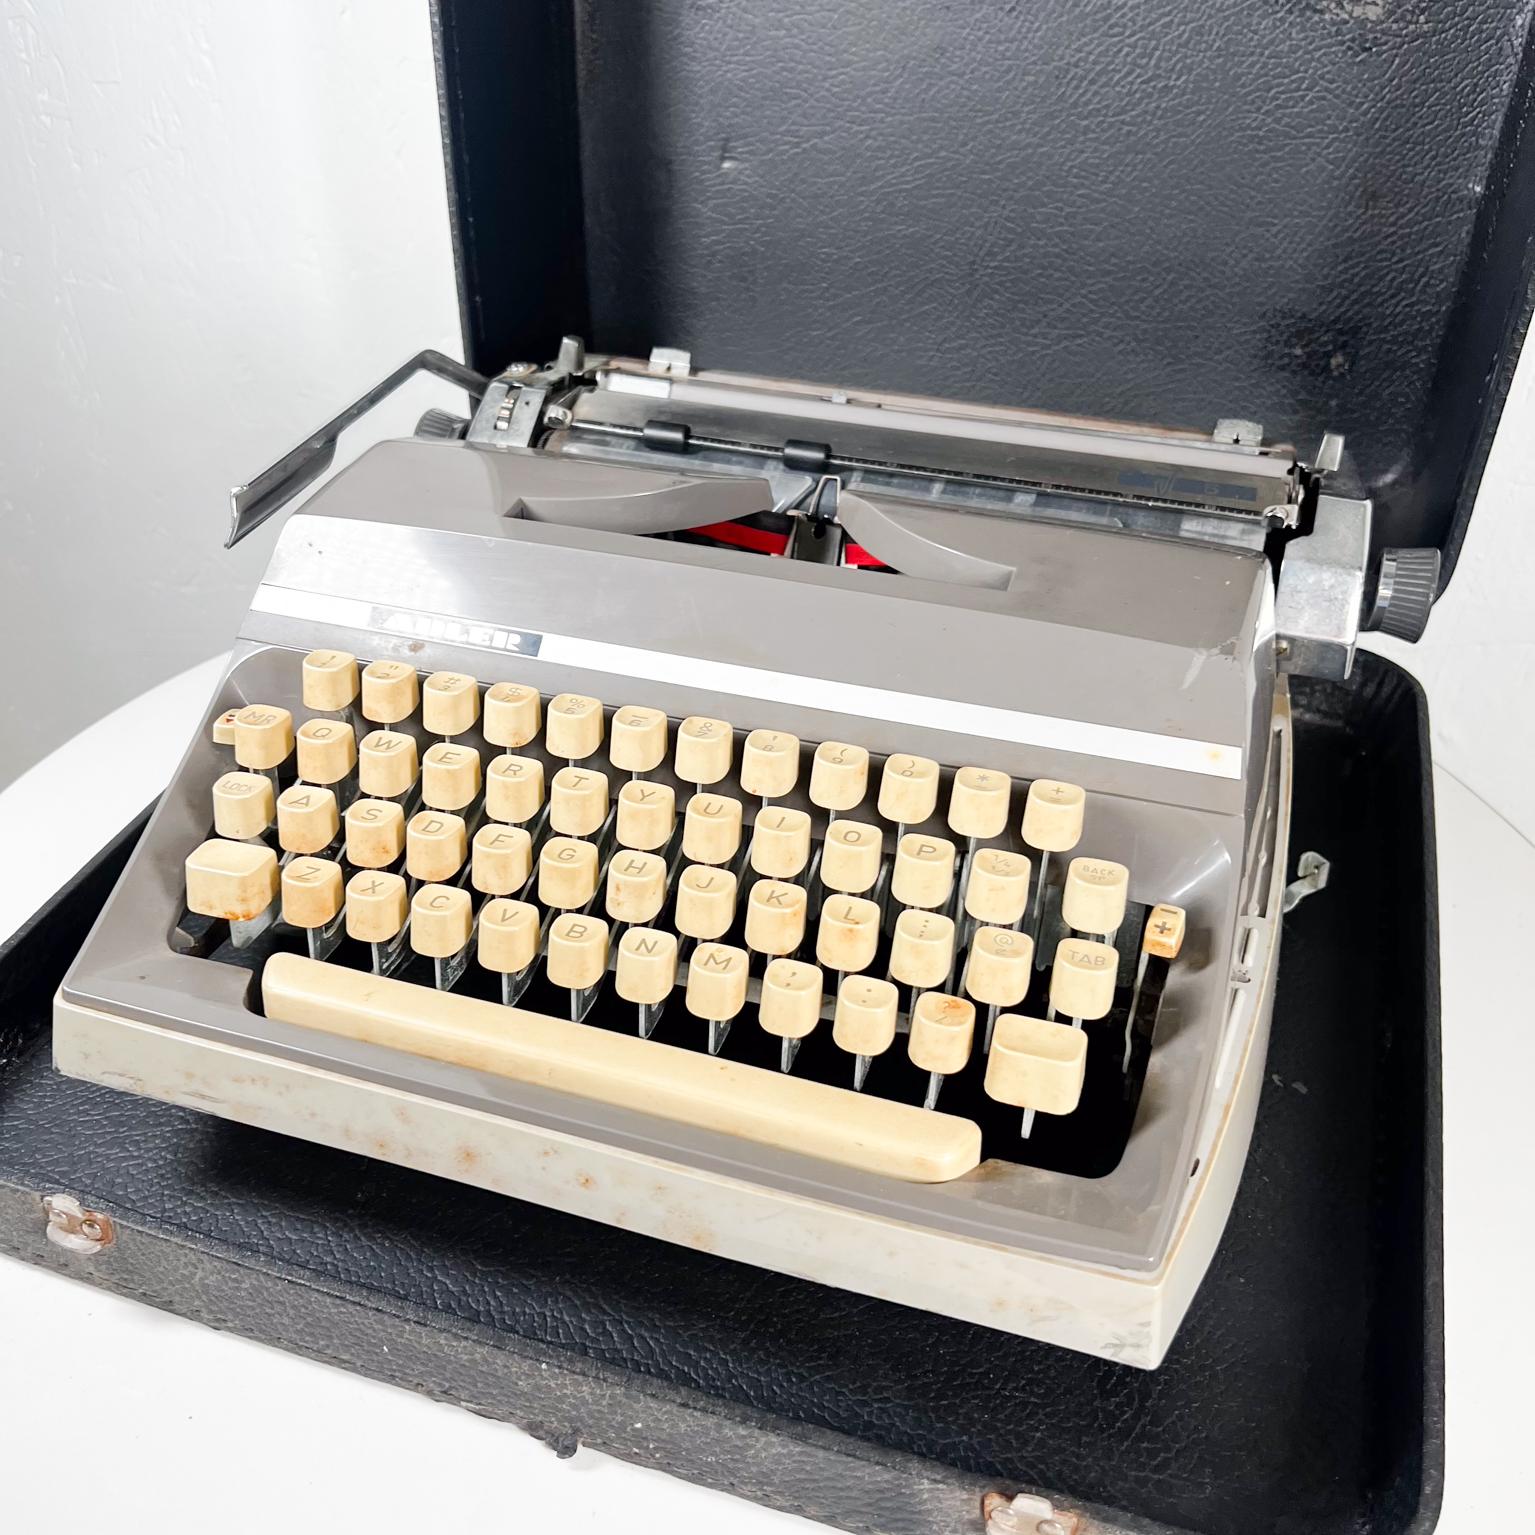 1968 Adler J5 Manual Typewriter with Case West Germany 7